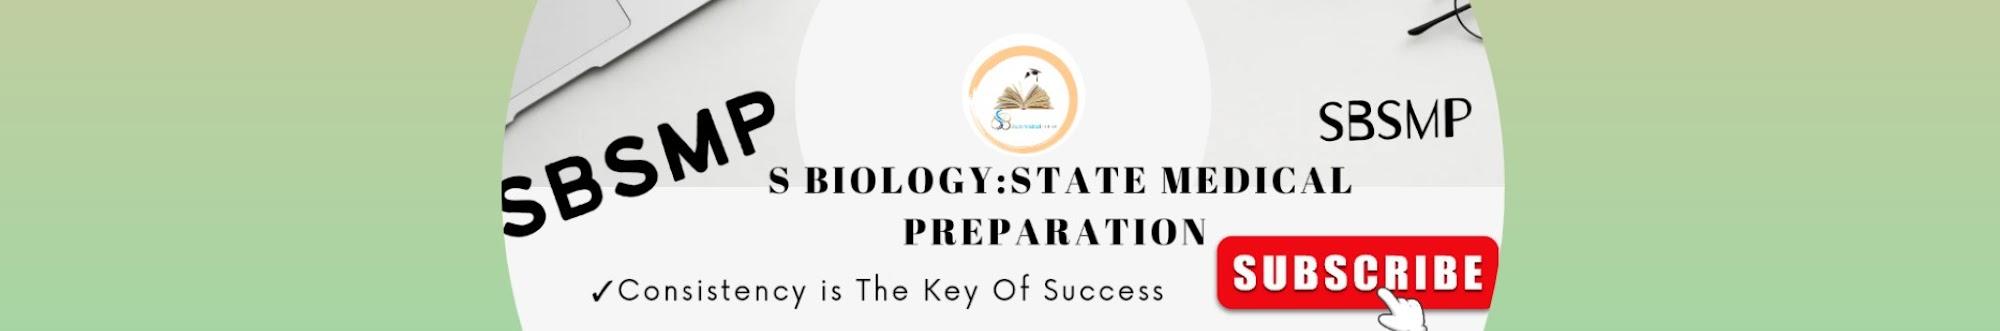 S Biology State Medical Preparation